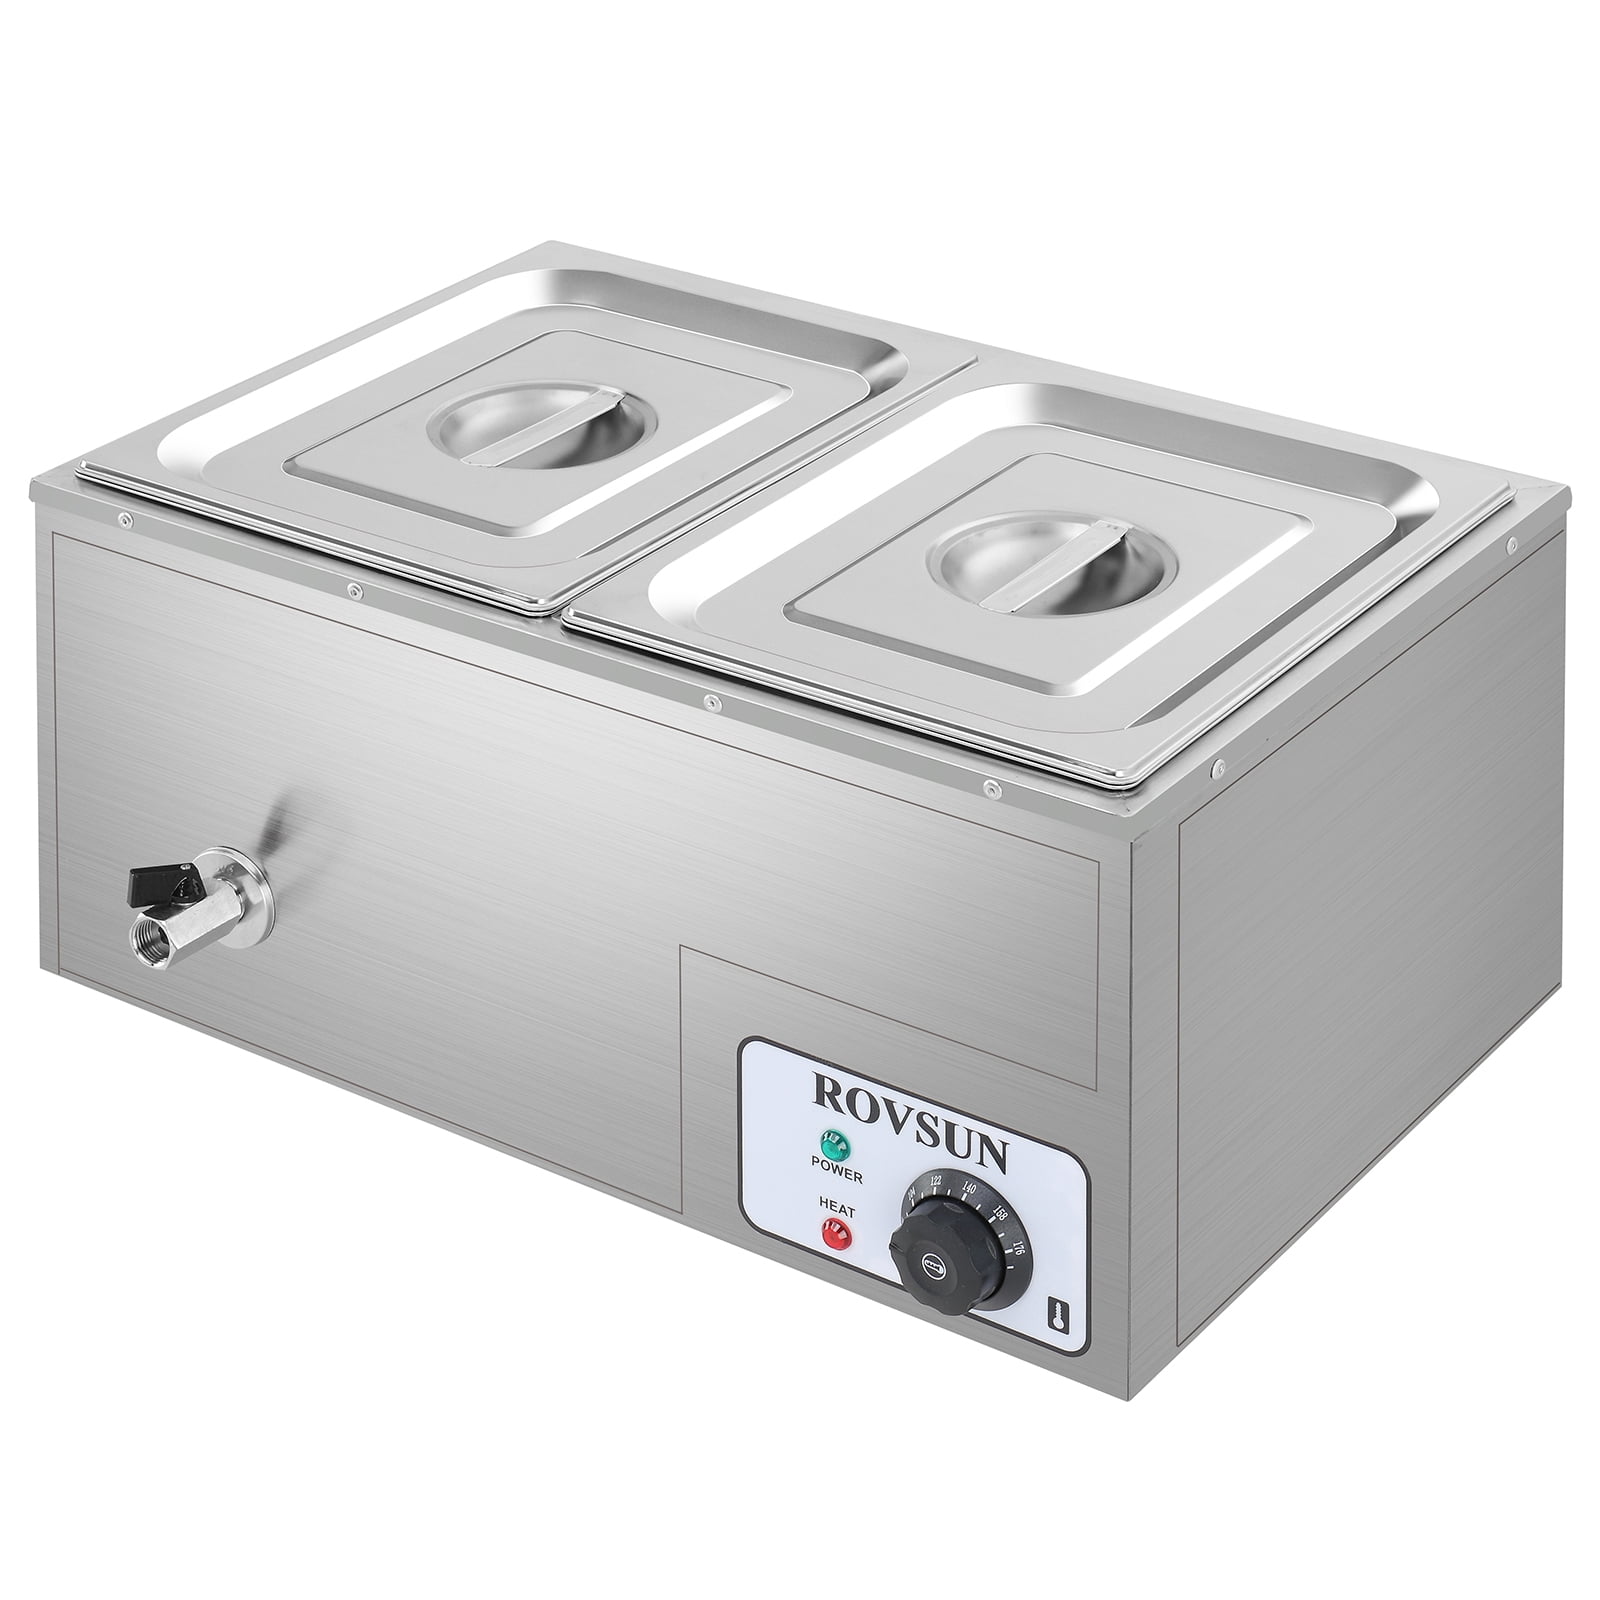 10-quart Kitchen Kettle™ XL multi-cooker/steamer - Multi-Cookers - Presto®